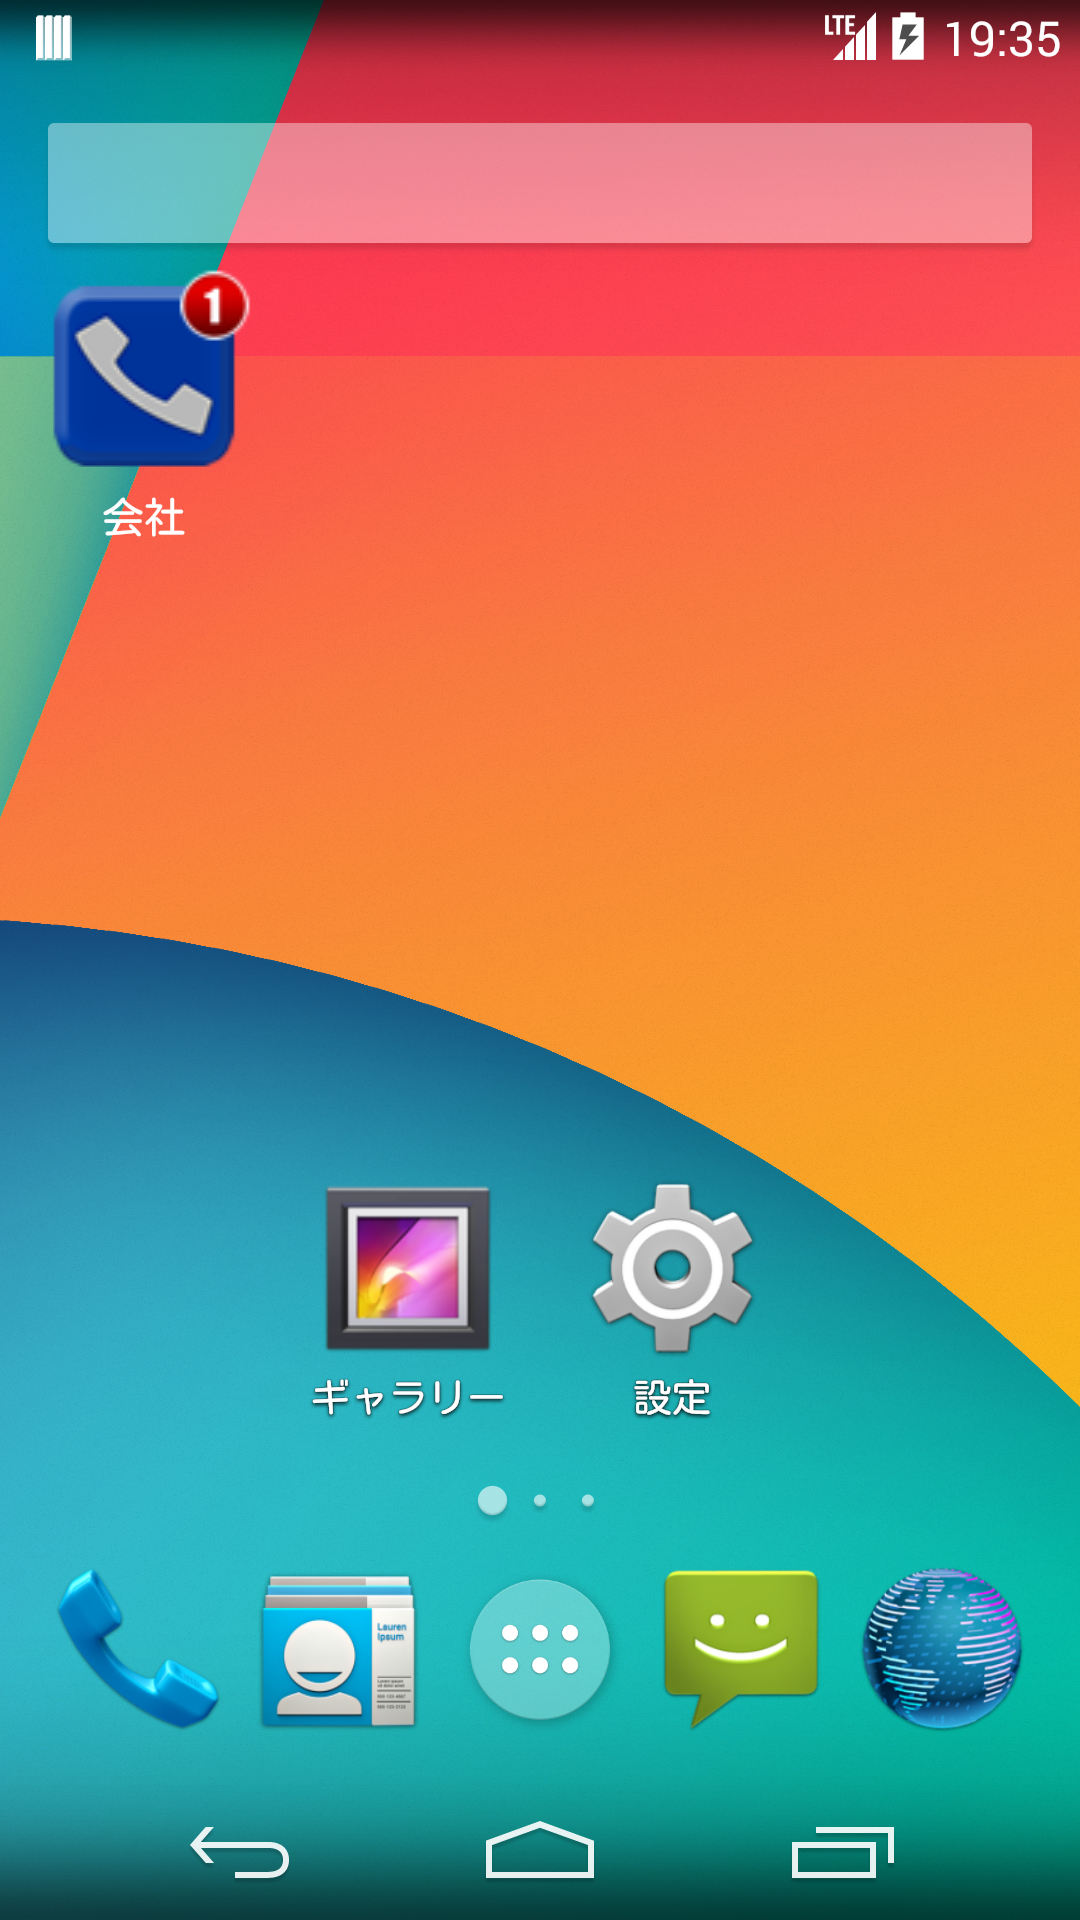 Android application ワンタッチダイヤルＥＸ 【らくらくコール】 screenshort